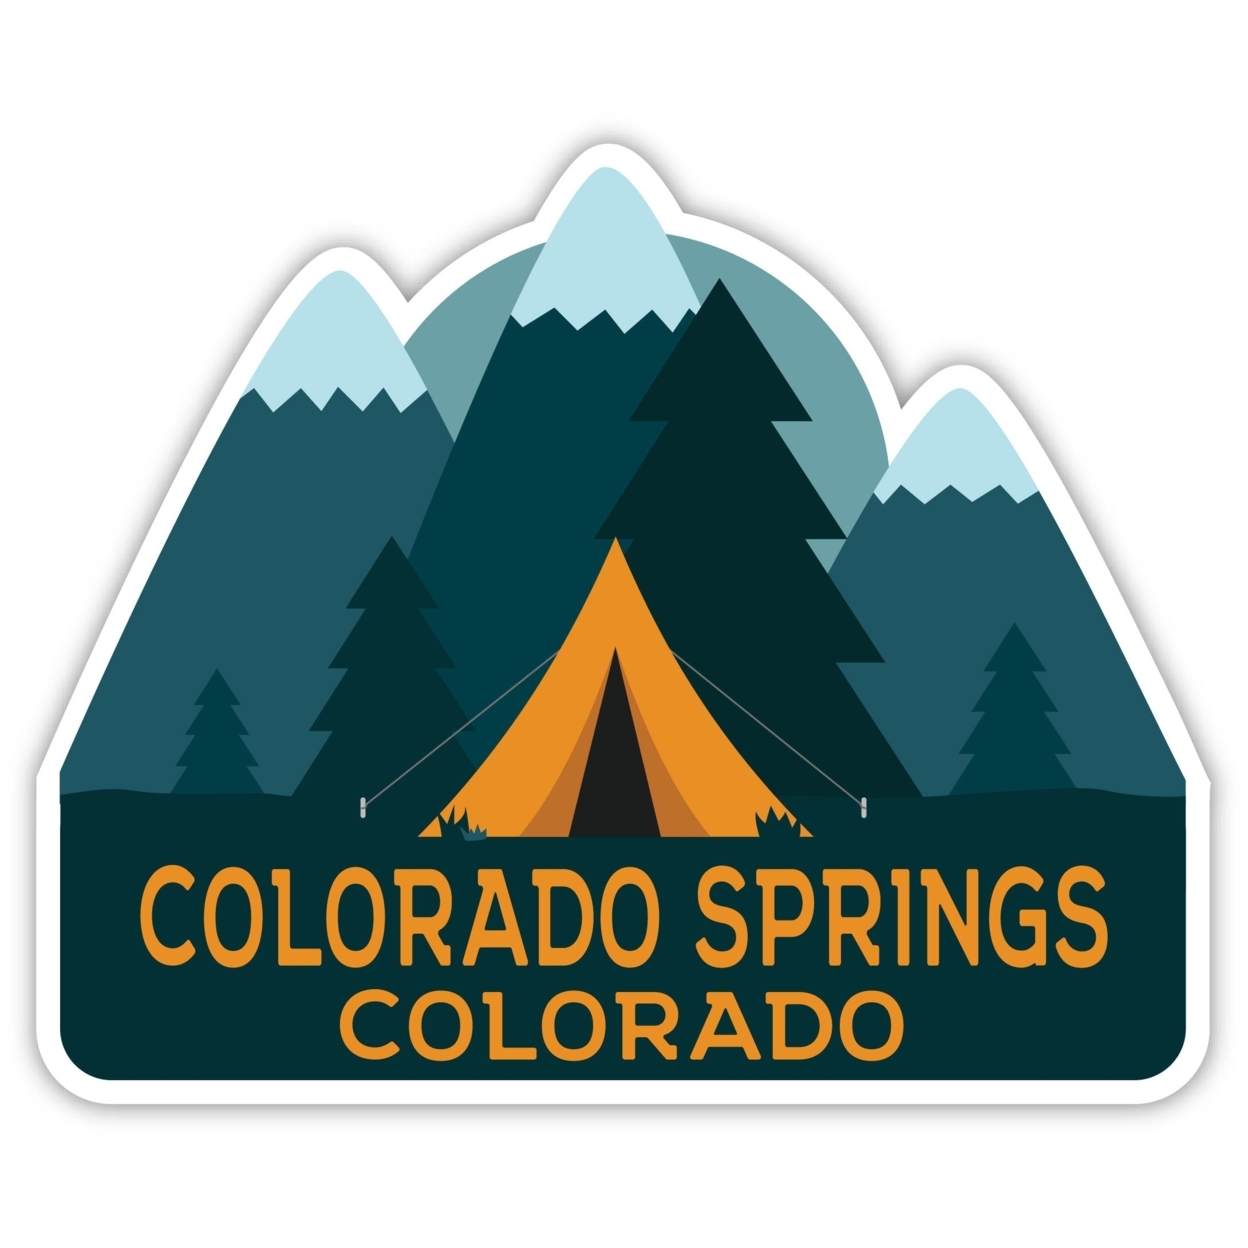 Colorado Springs Colorado Souvenir Decorative Stickers (Choose Theme And Size) - 4-Pack, 4-Inch, Tent